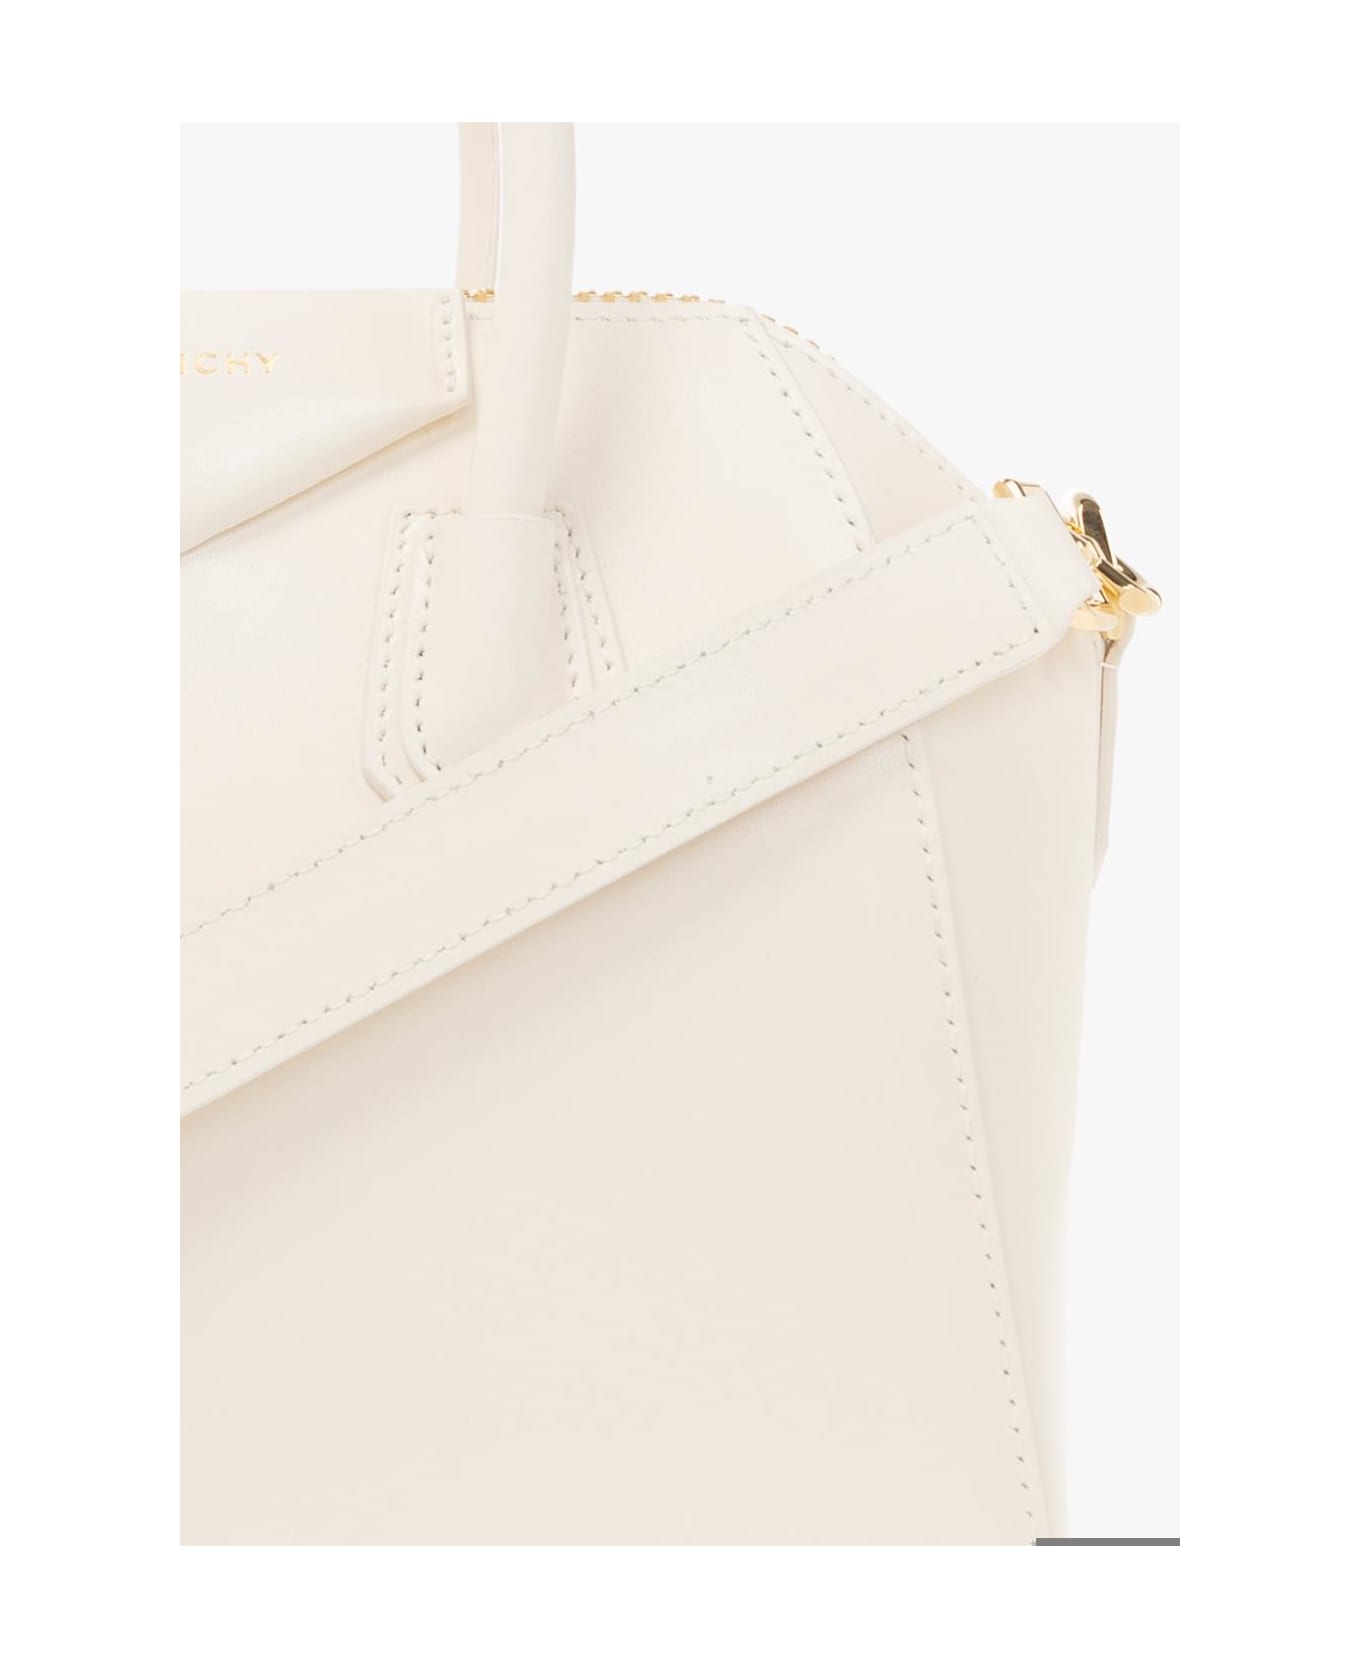 Givenchy Antigona Mini Handbag - White